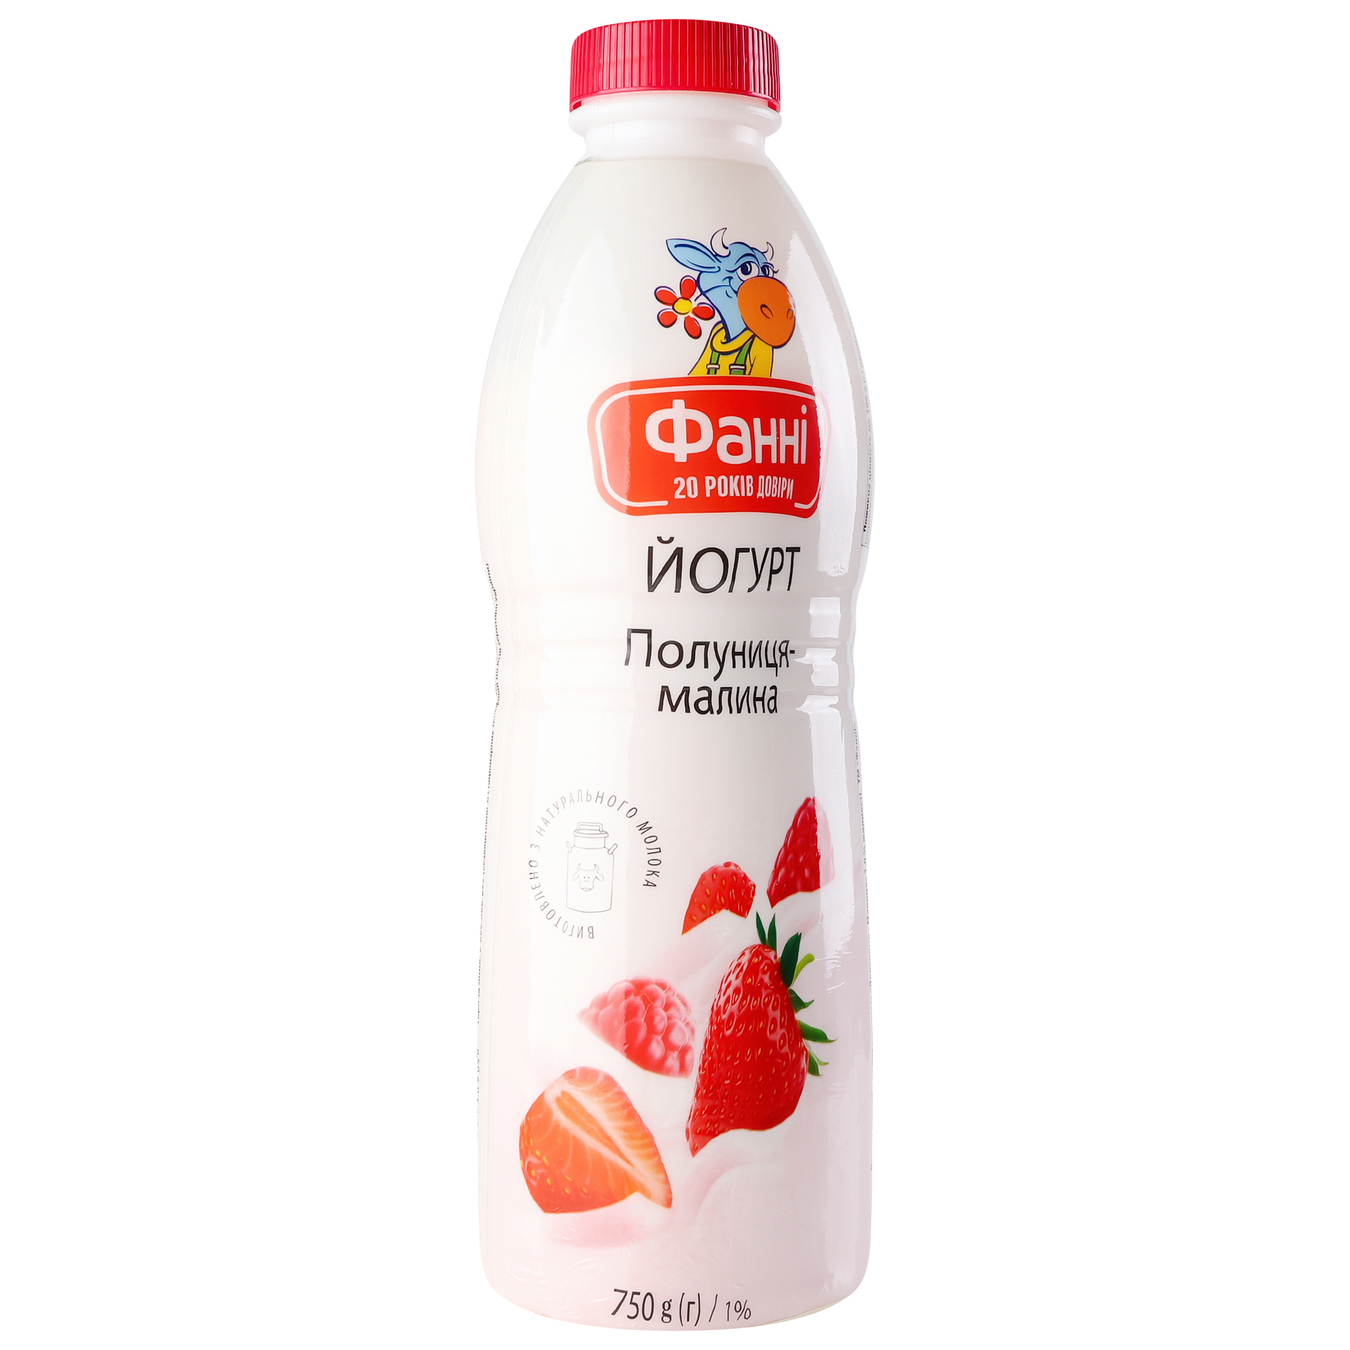 Fanny yogurt with strawberry-raspberry filling drinking bottle 1% 750g 3